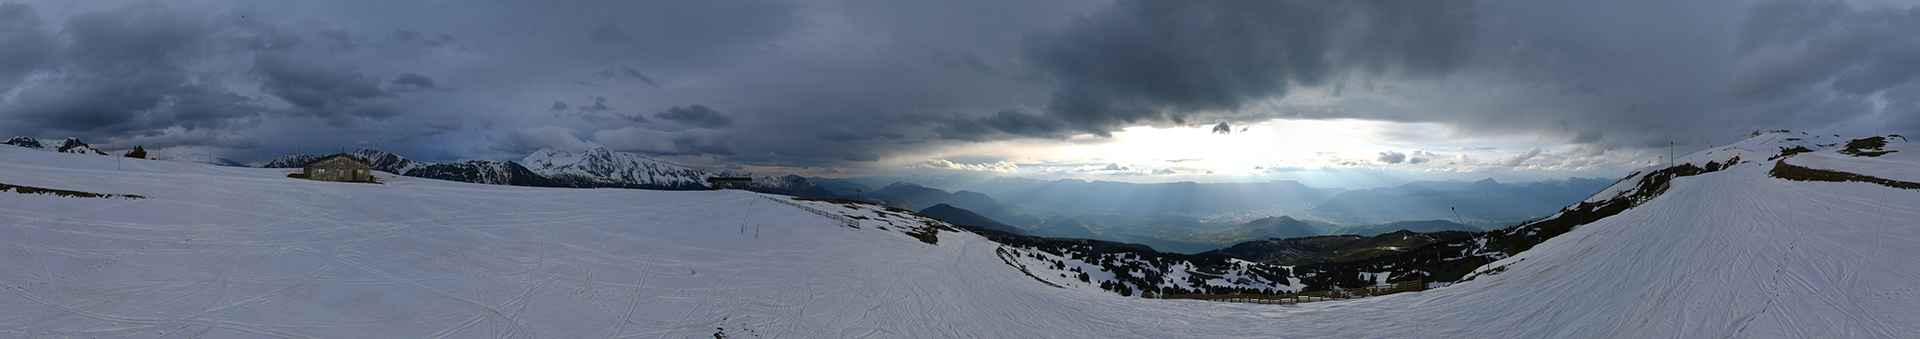 Chamrousse webcam ciel nuage mai 2021 station ski montagne grenoble isère alpes france - © Skaping